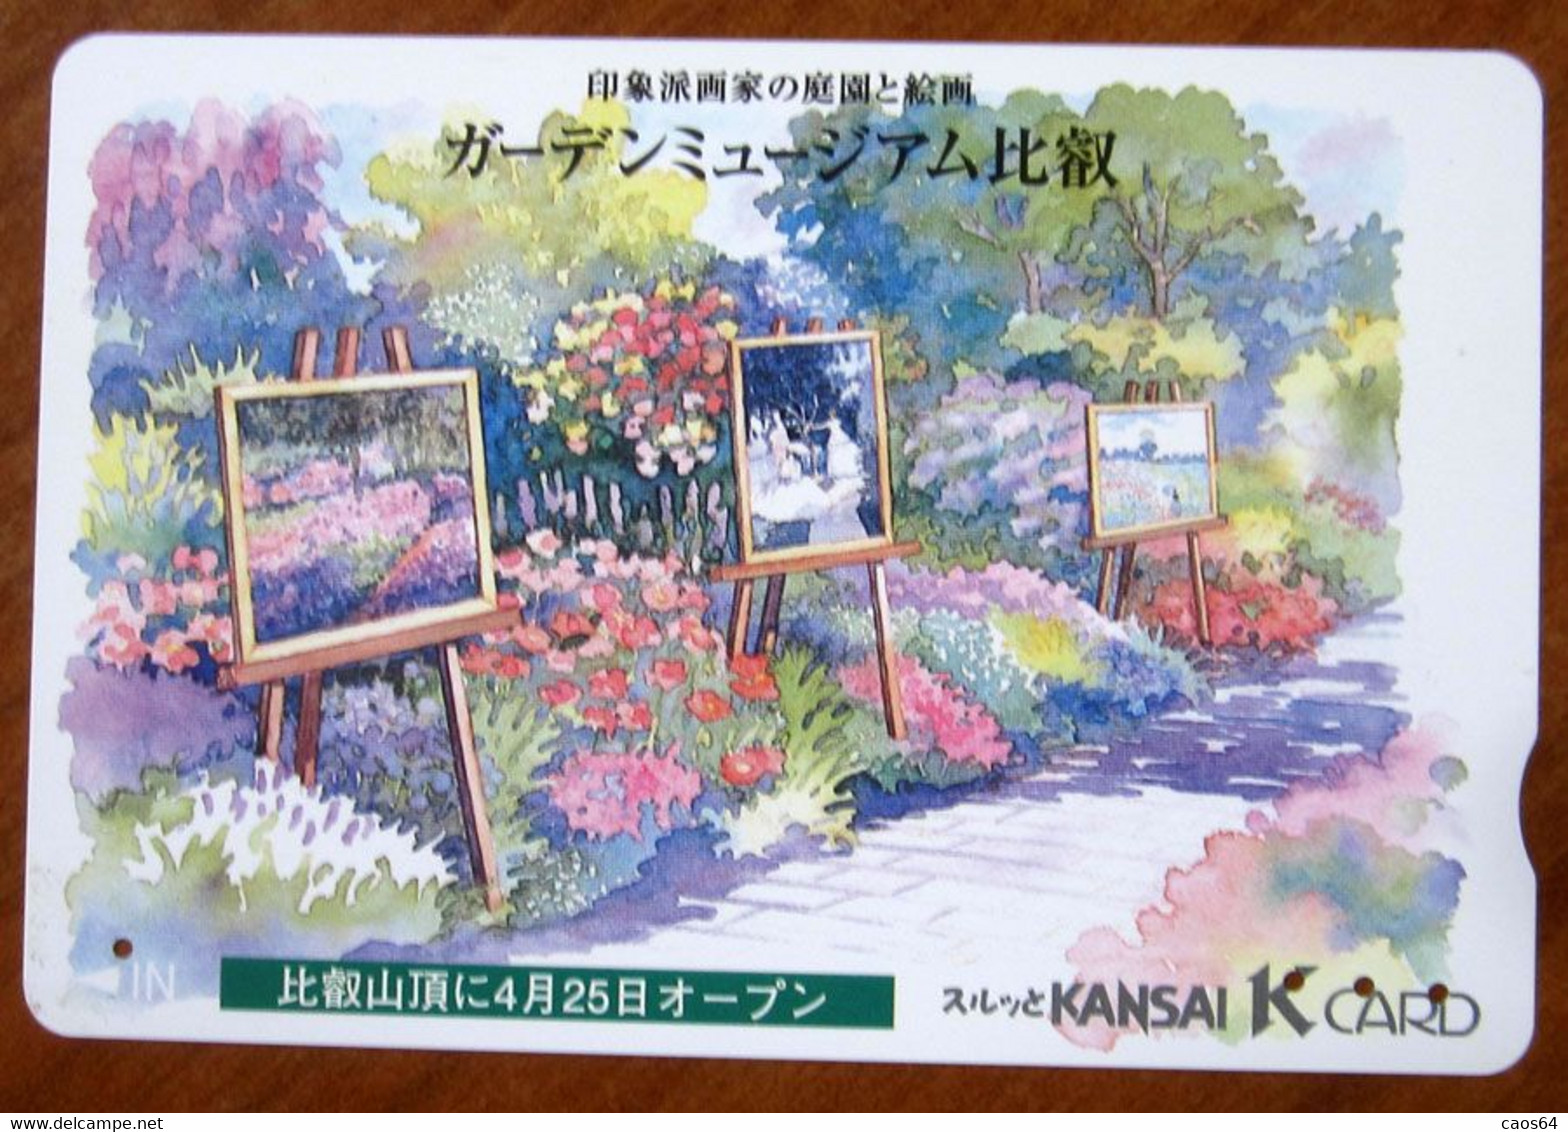 GIAPPONE Ticket Biglietto Arte Fiori Giardini Paintings In Gardens - Kansai Railway K Card 1.000 ¥ - Usato - Welt